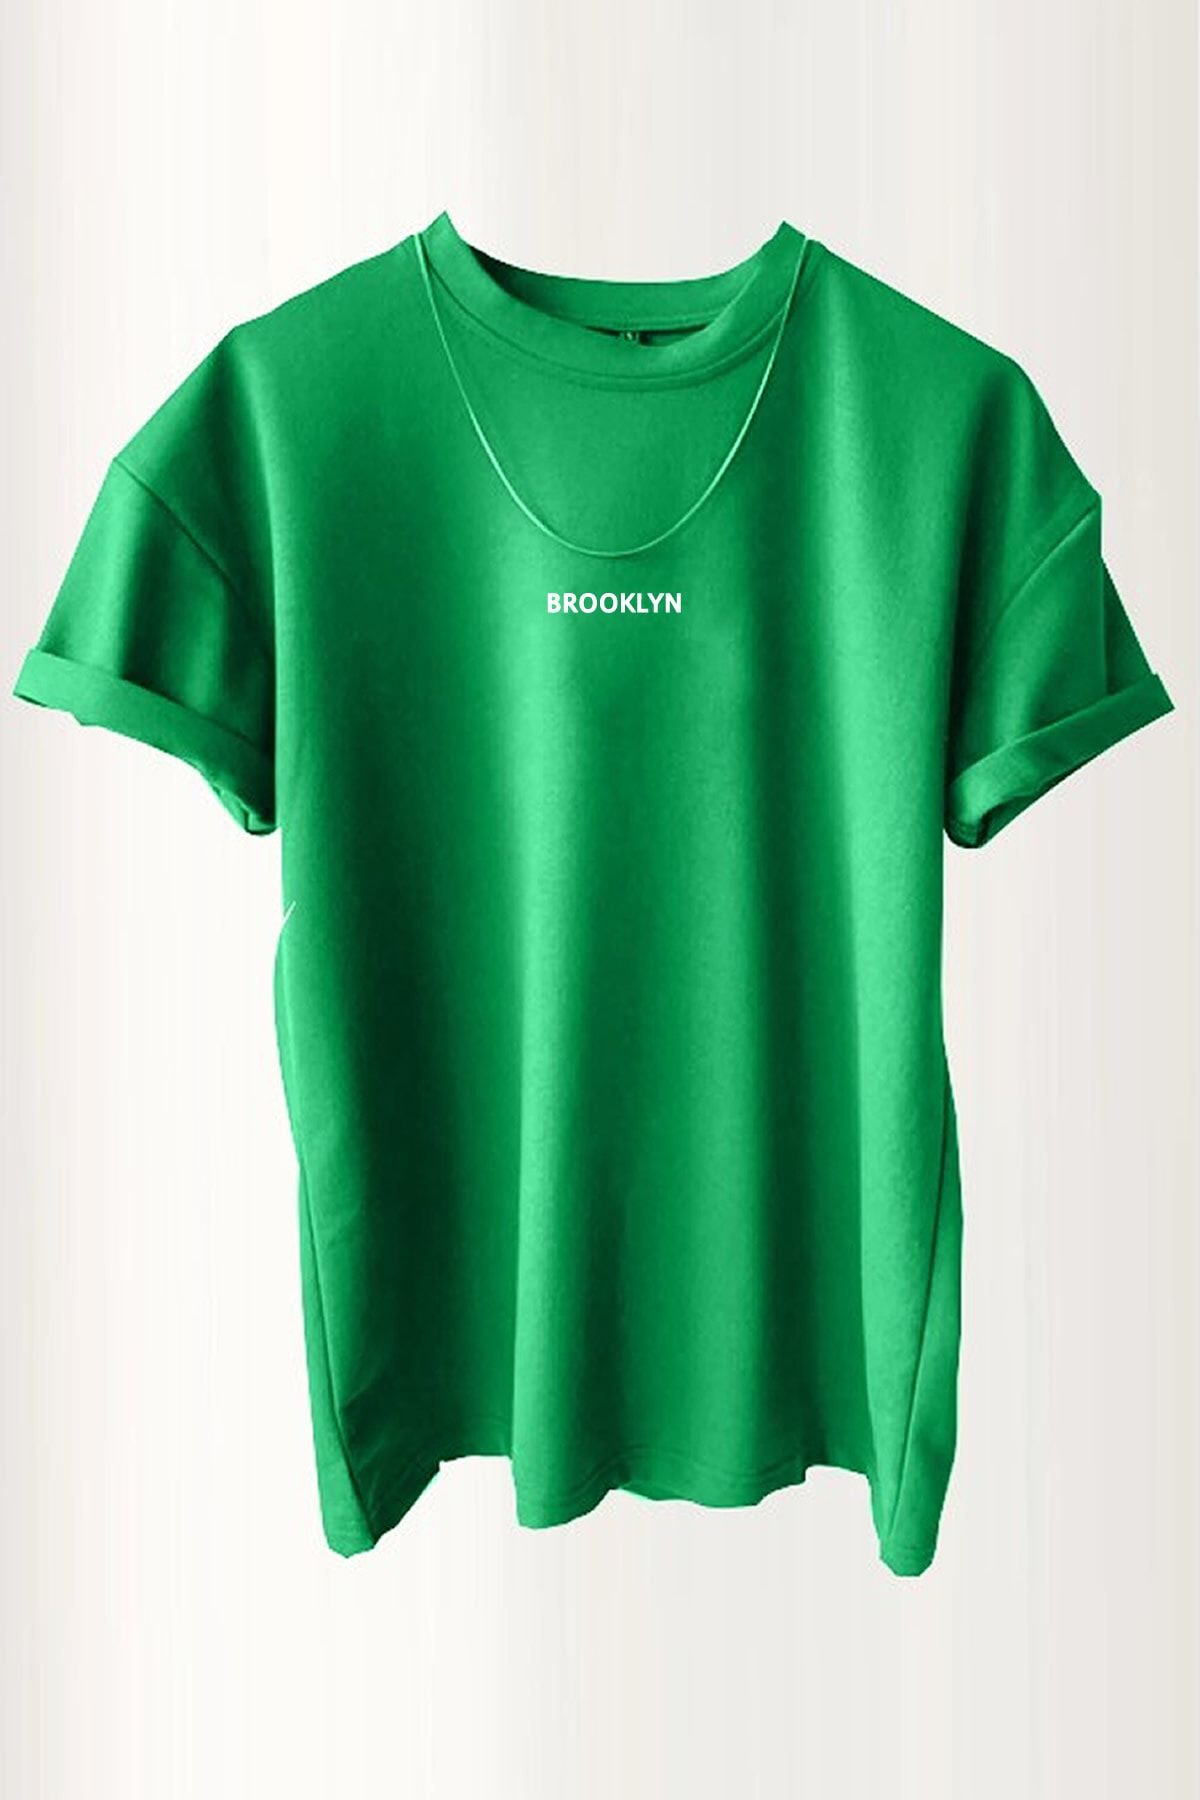 MODAGEN Unisex Yeşil Brooklyn Baskılı T-shirt